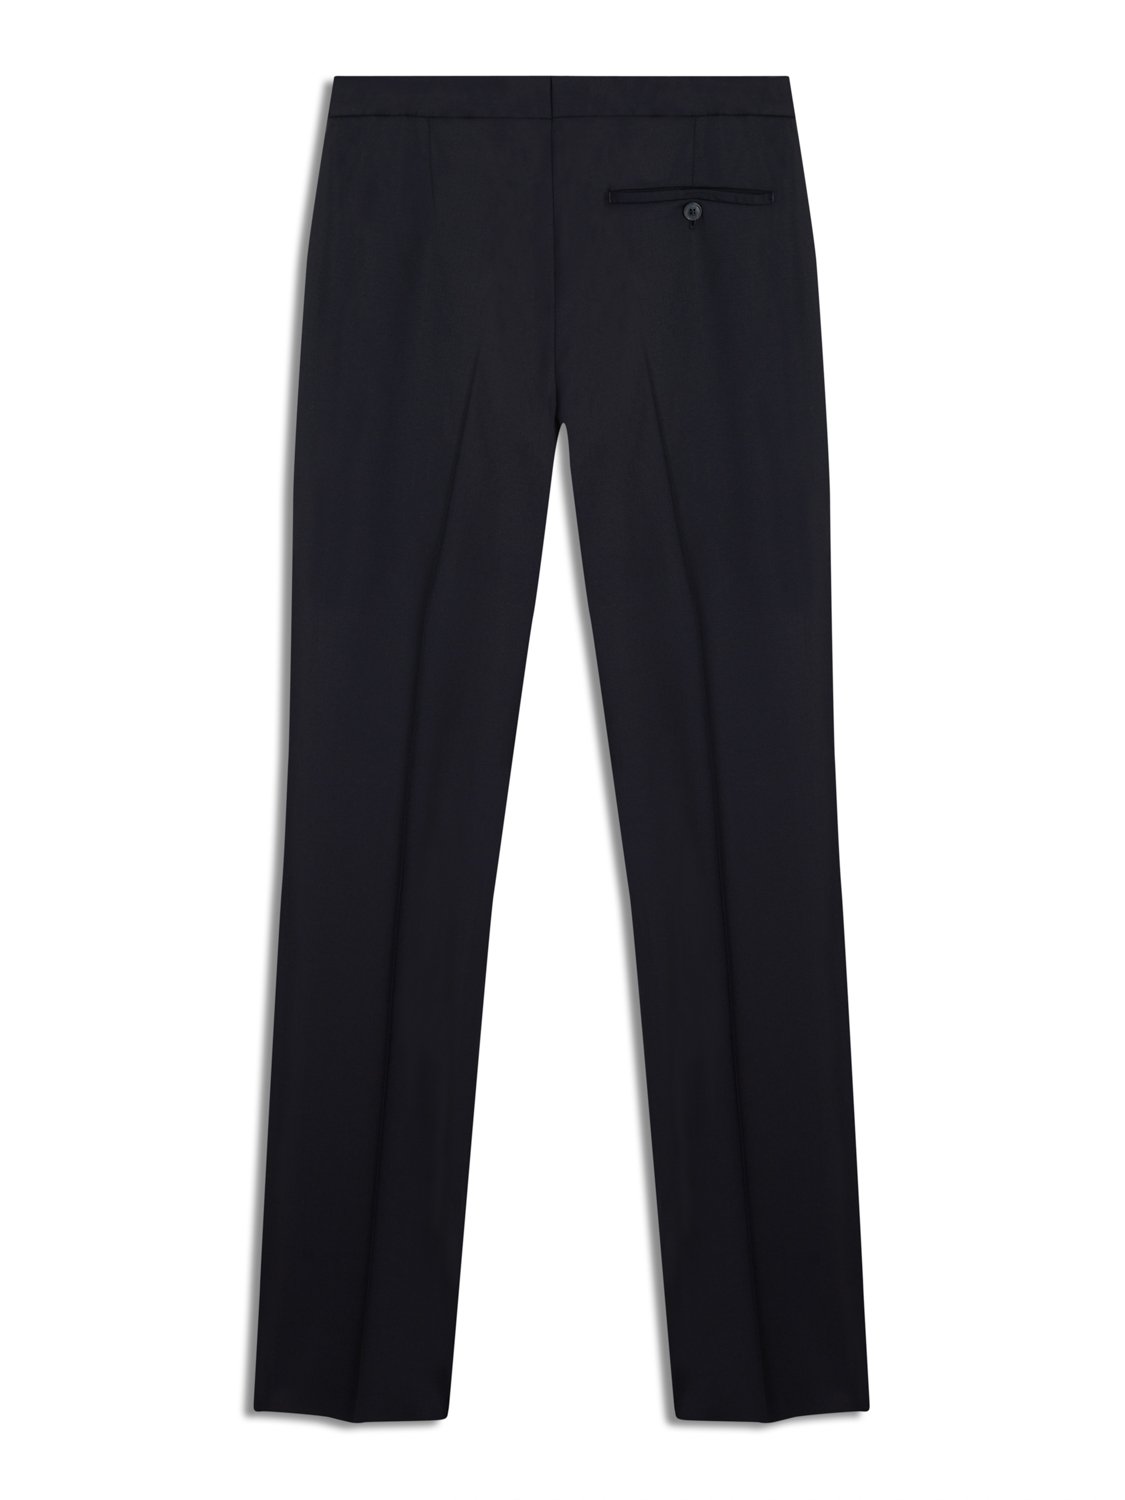 Kilgour Savile Row Tailoring Kilgour SB1 Suit Trouser Navy